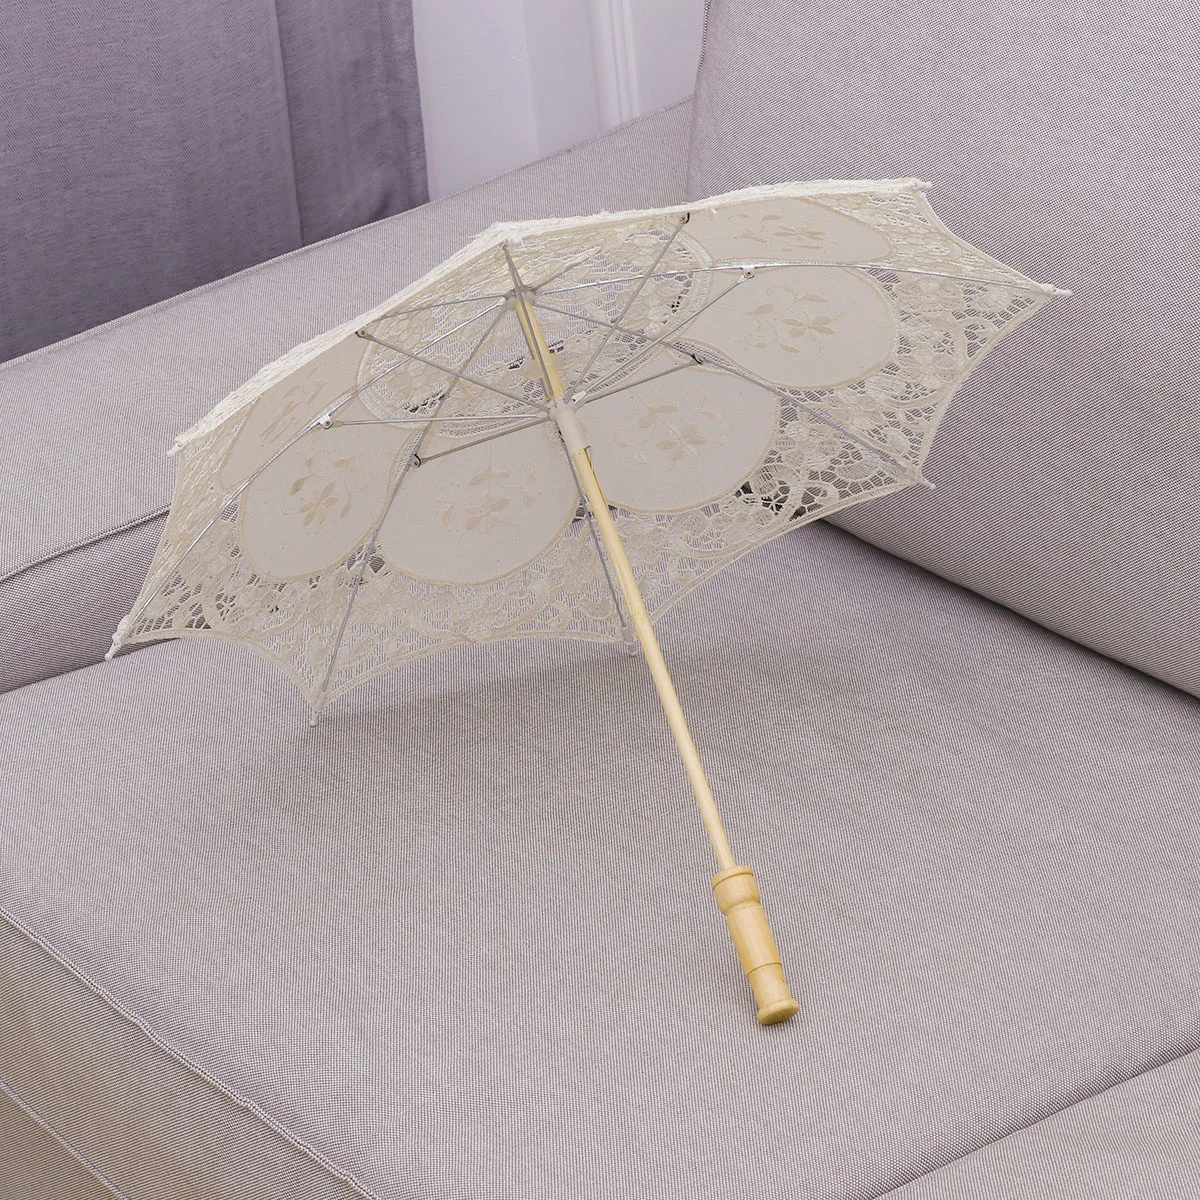 

Lace Umbrella Handmade Cotton Craft Photography Prop Wedding Umbrella Decor Diameter 60cm (Beige)